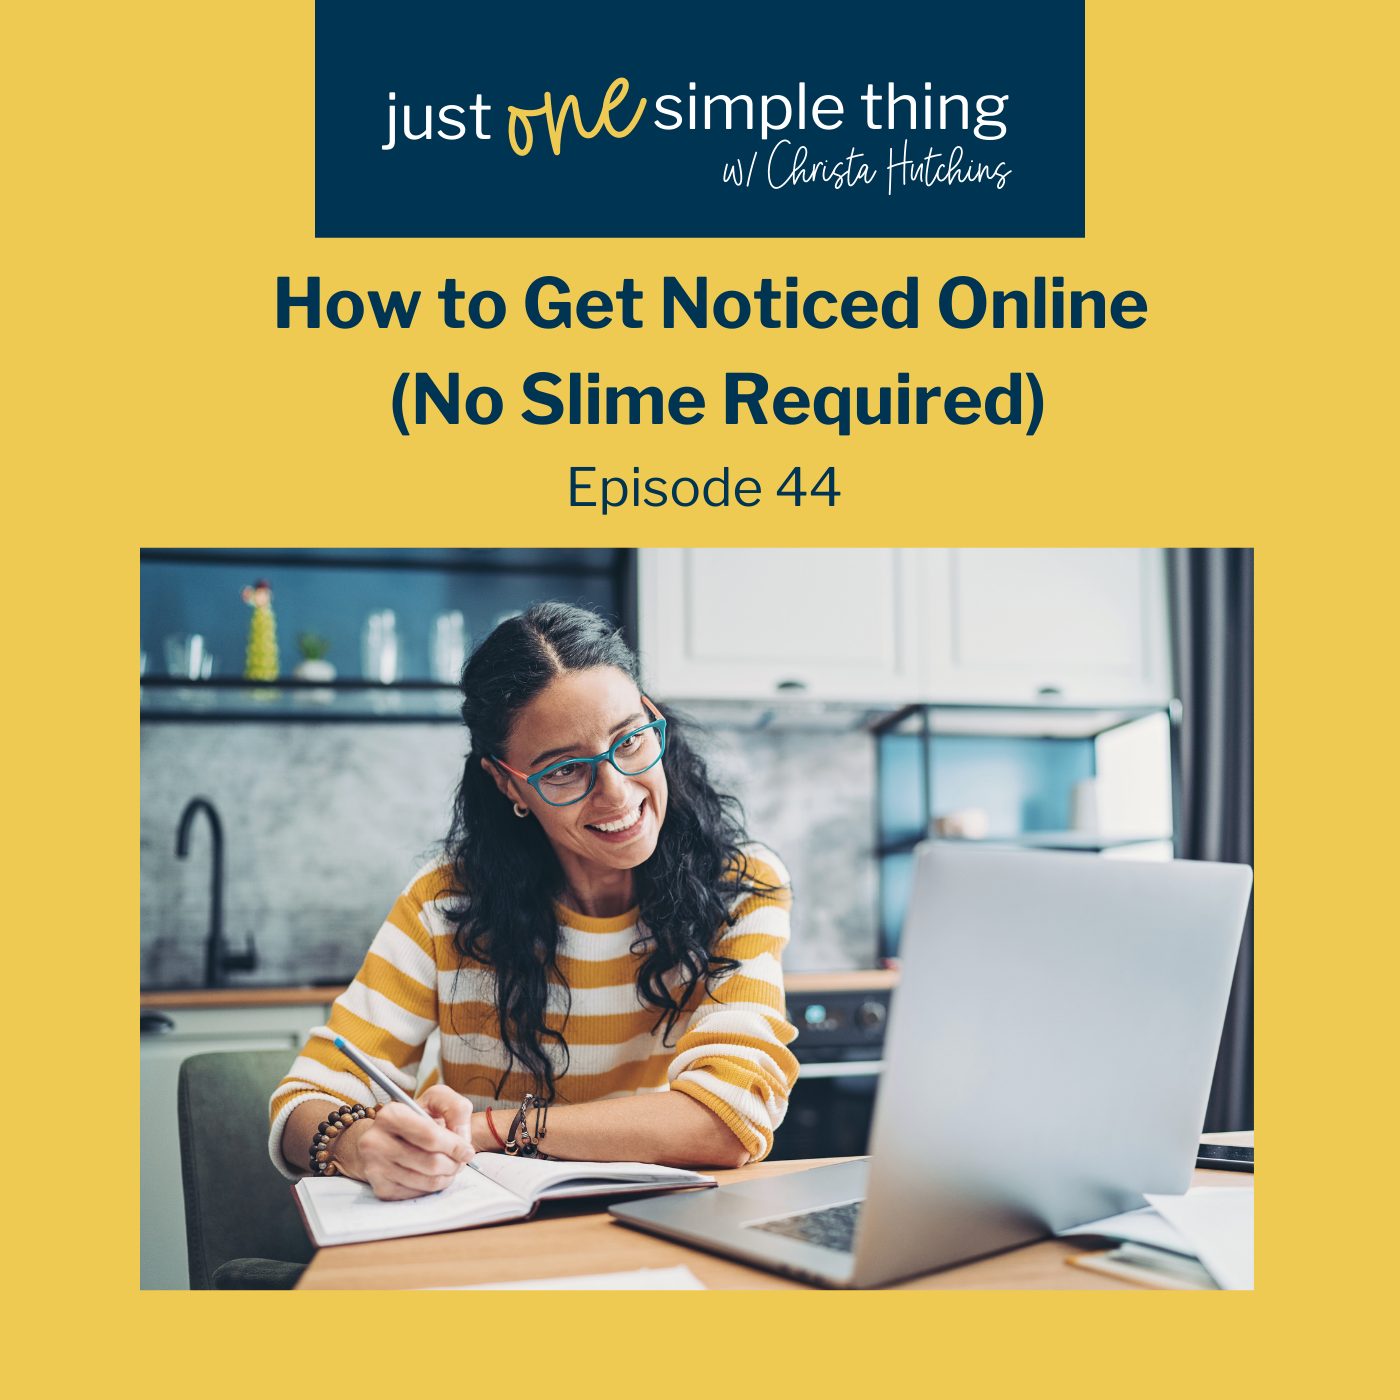 How to Get Noticed Online